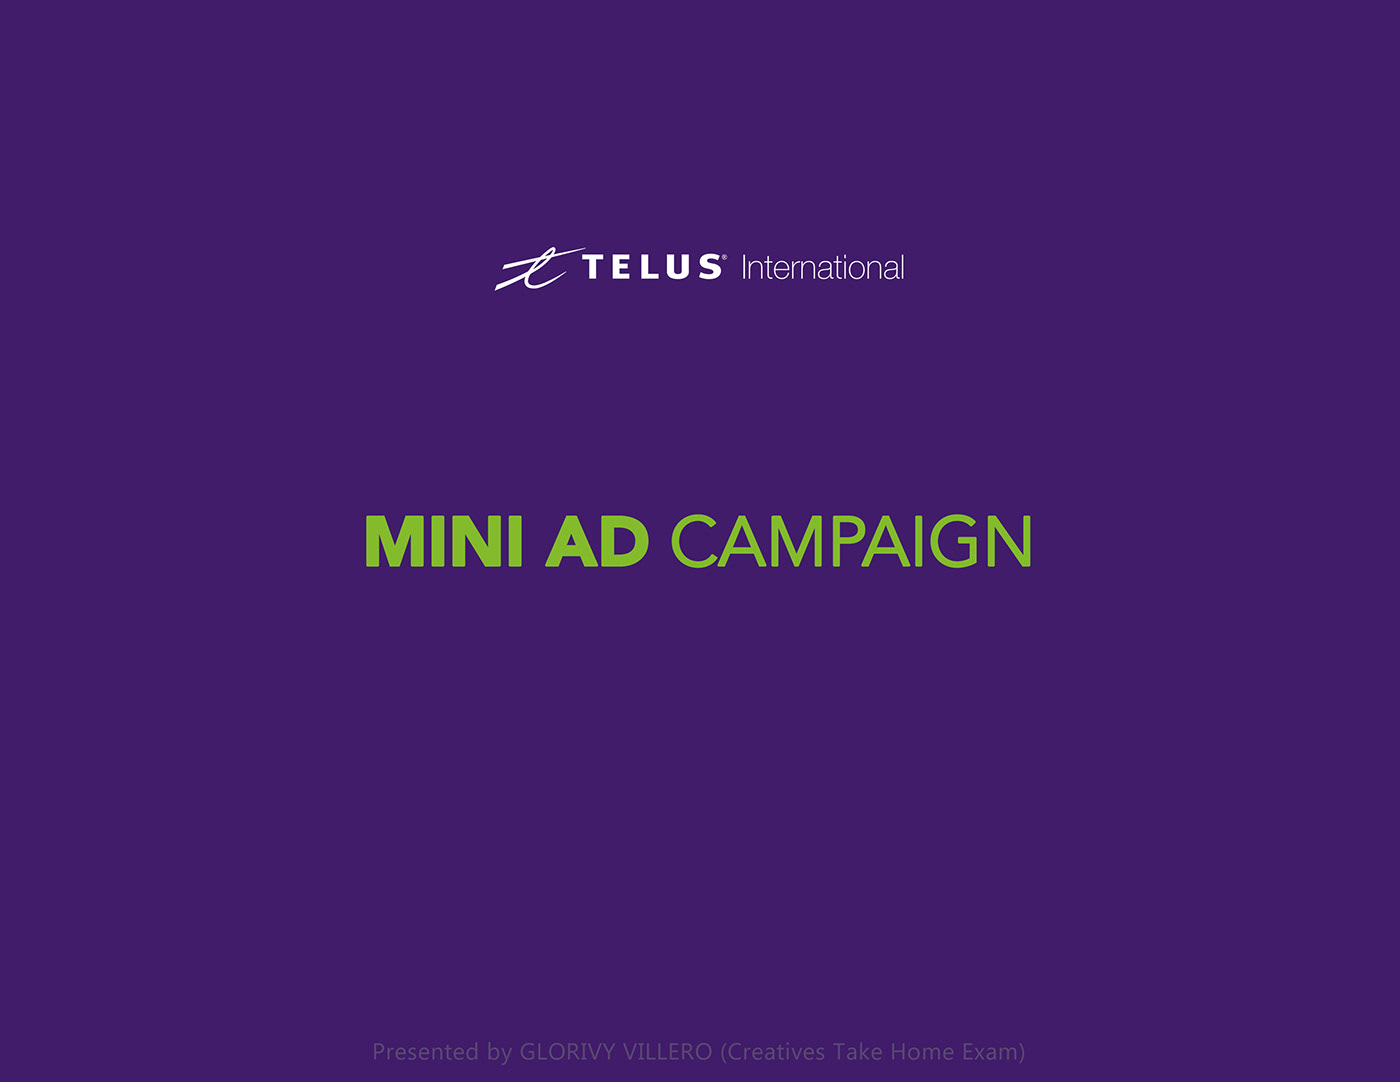 ad campaign Socialmedia ads brand identity Graphic Designer Adobe Photoshop Social media post visual identity